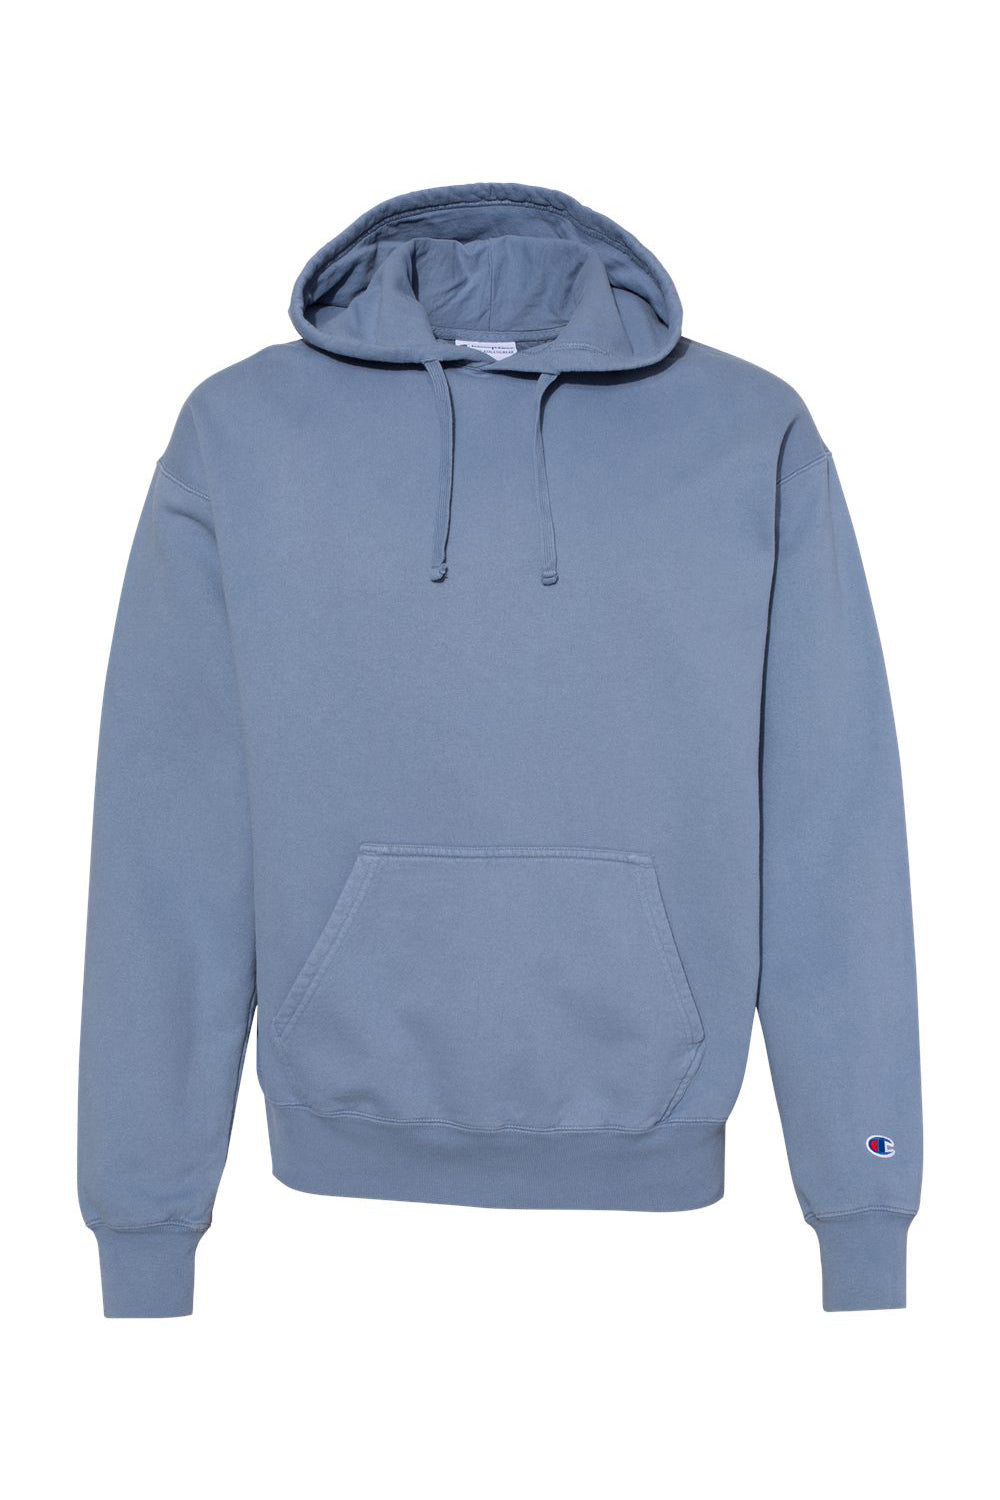 Champion CD450 Mens Garment Dyed Hooded Sweatshirt Hoodie Saltwater Blue Flat Front